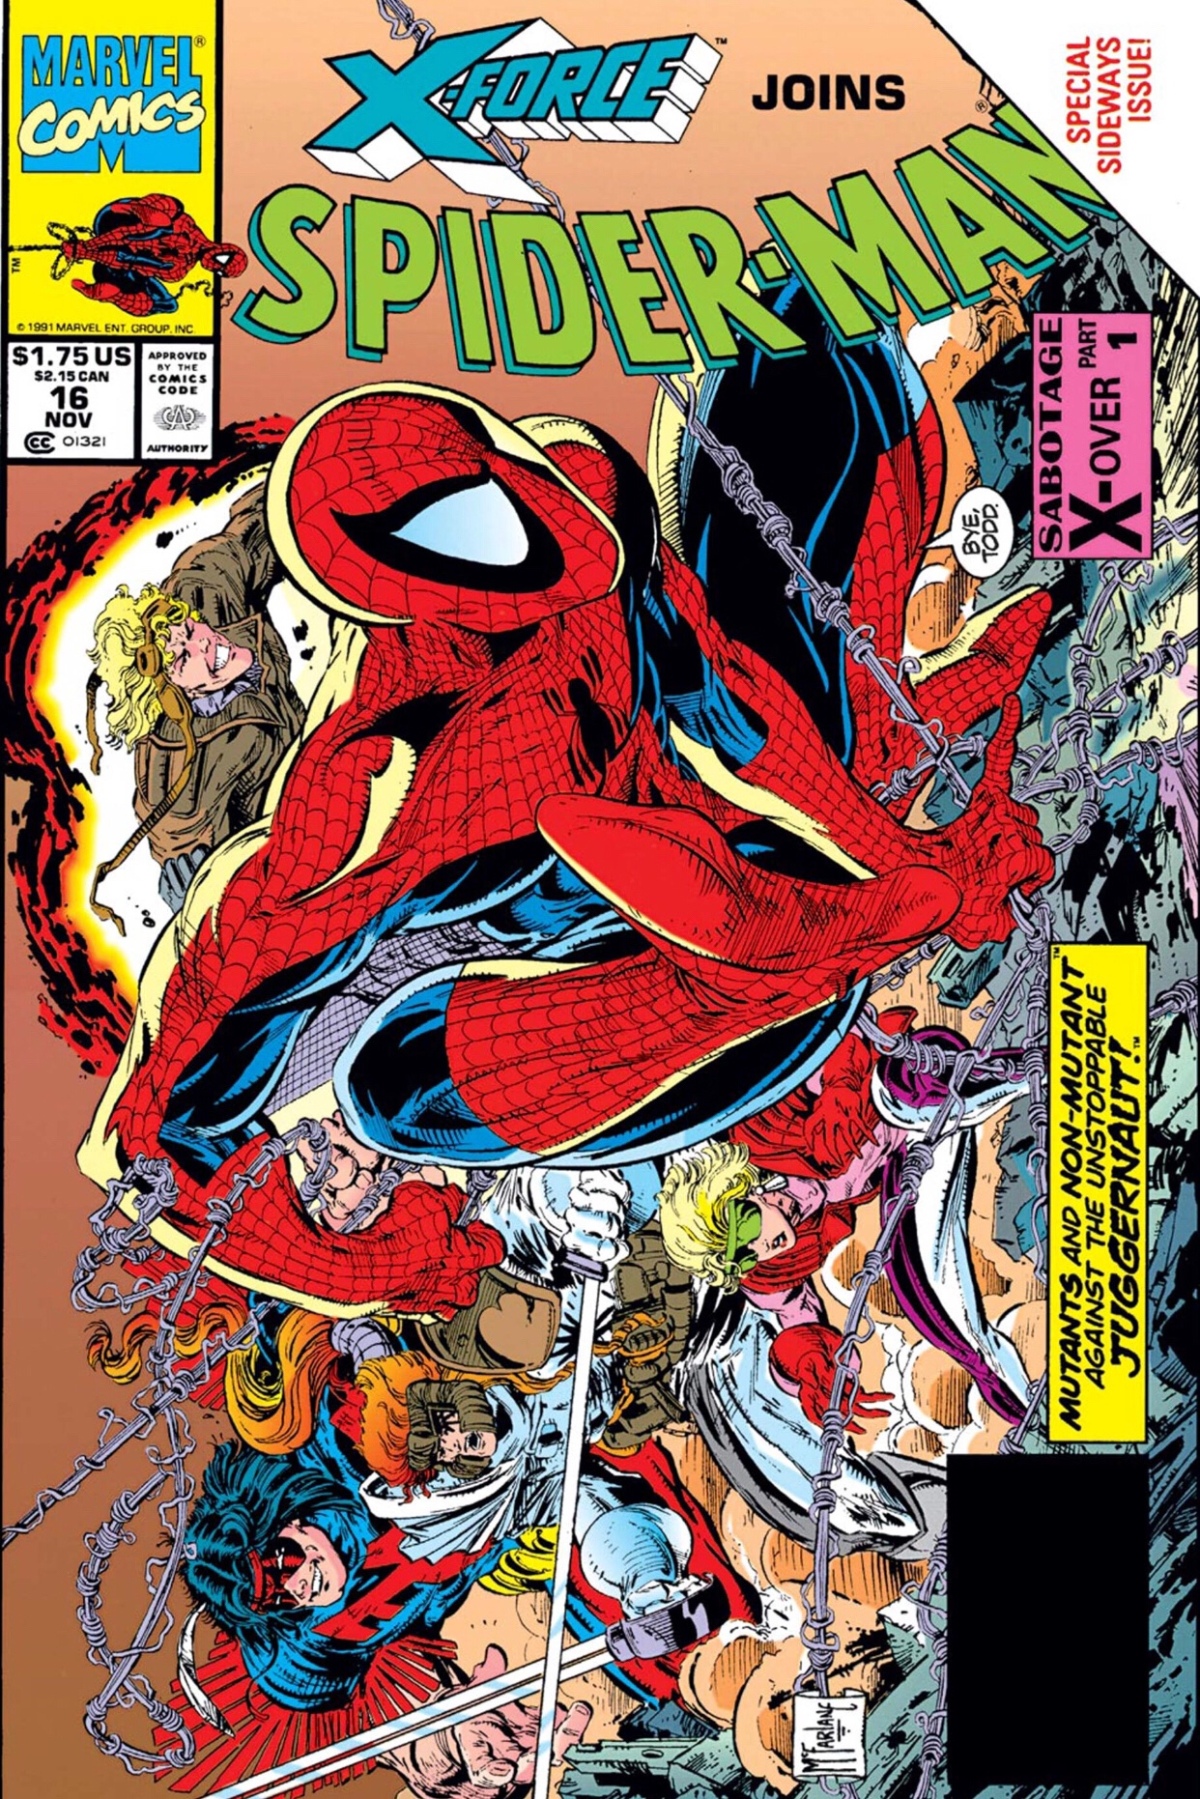 Spider-Man & X-Force vs. The Juggernaut (Spider-Man #16, 1991)